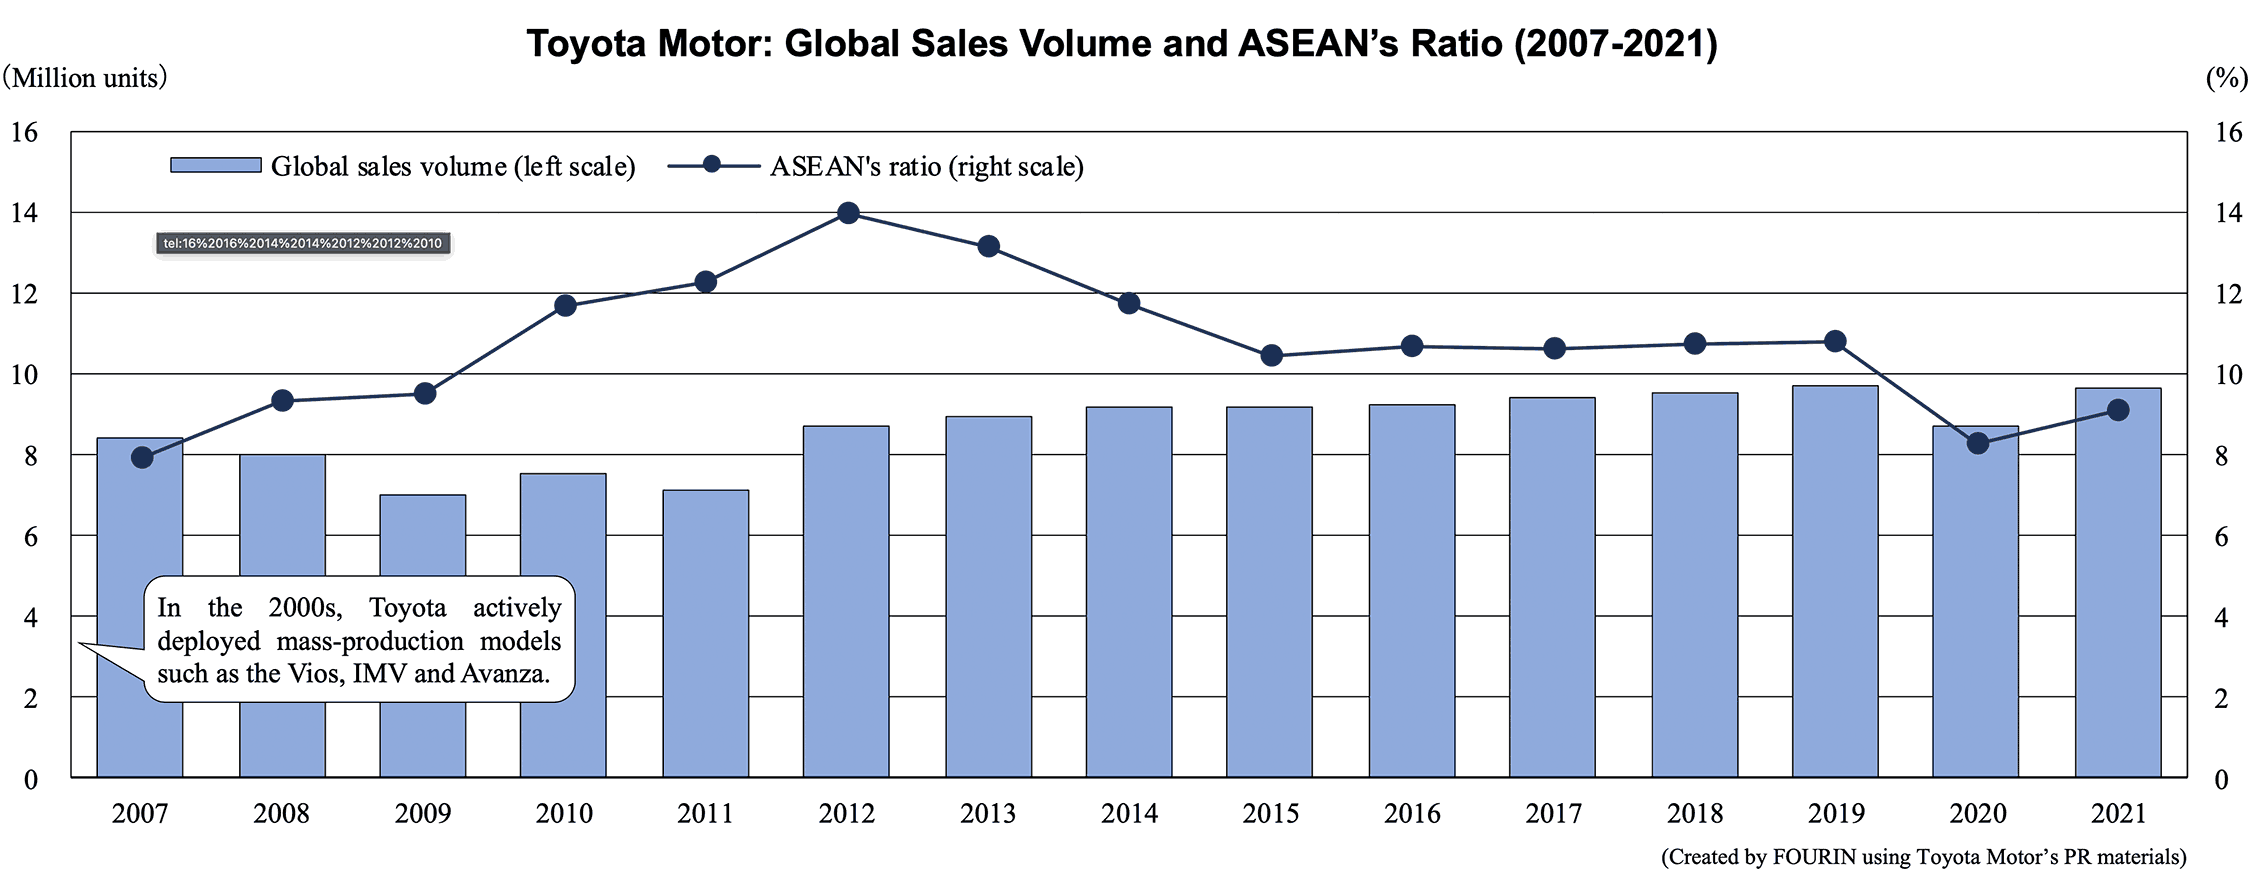 Toyota Motor: Global Sales Volume and ASEAN’s Ratio (2007-2021)